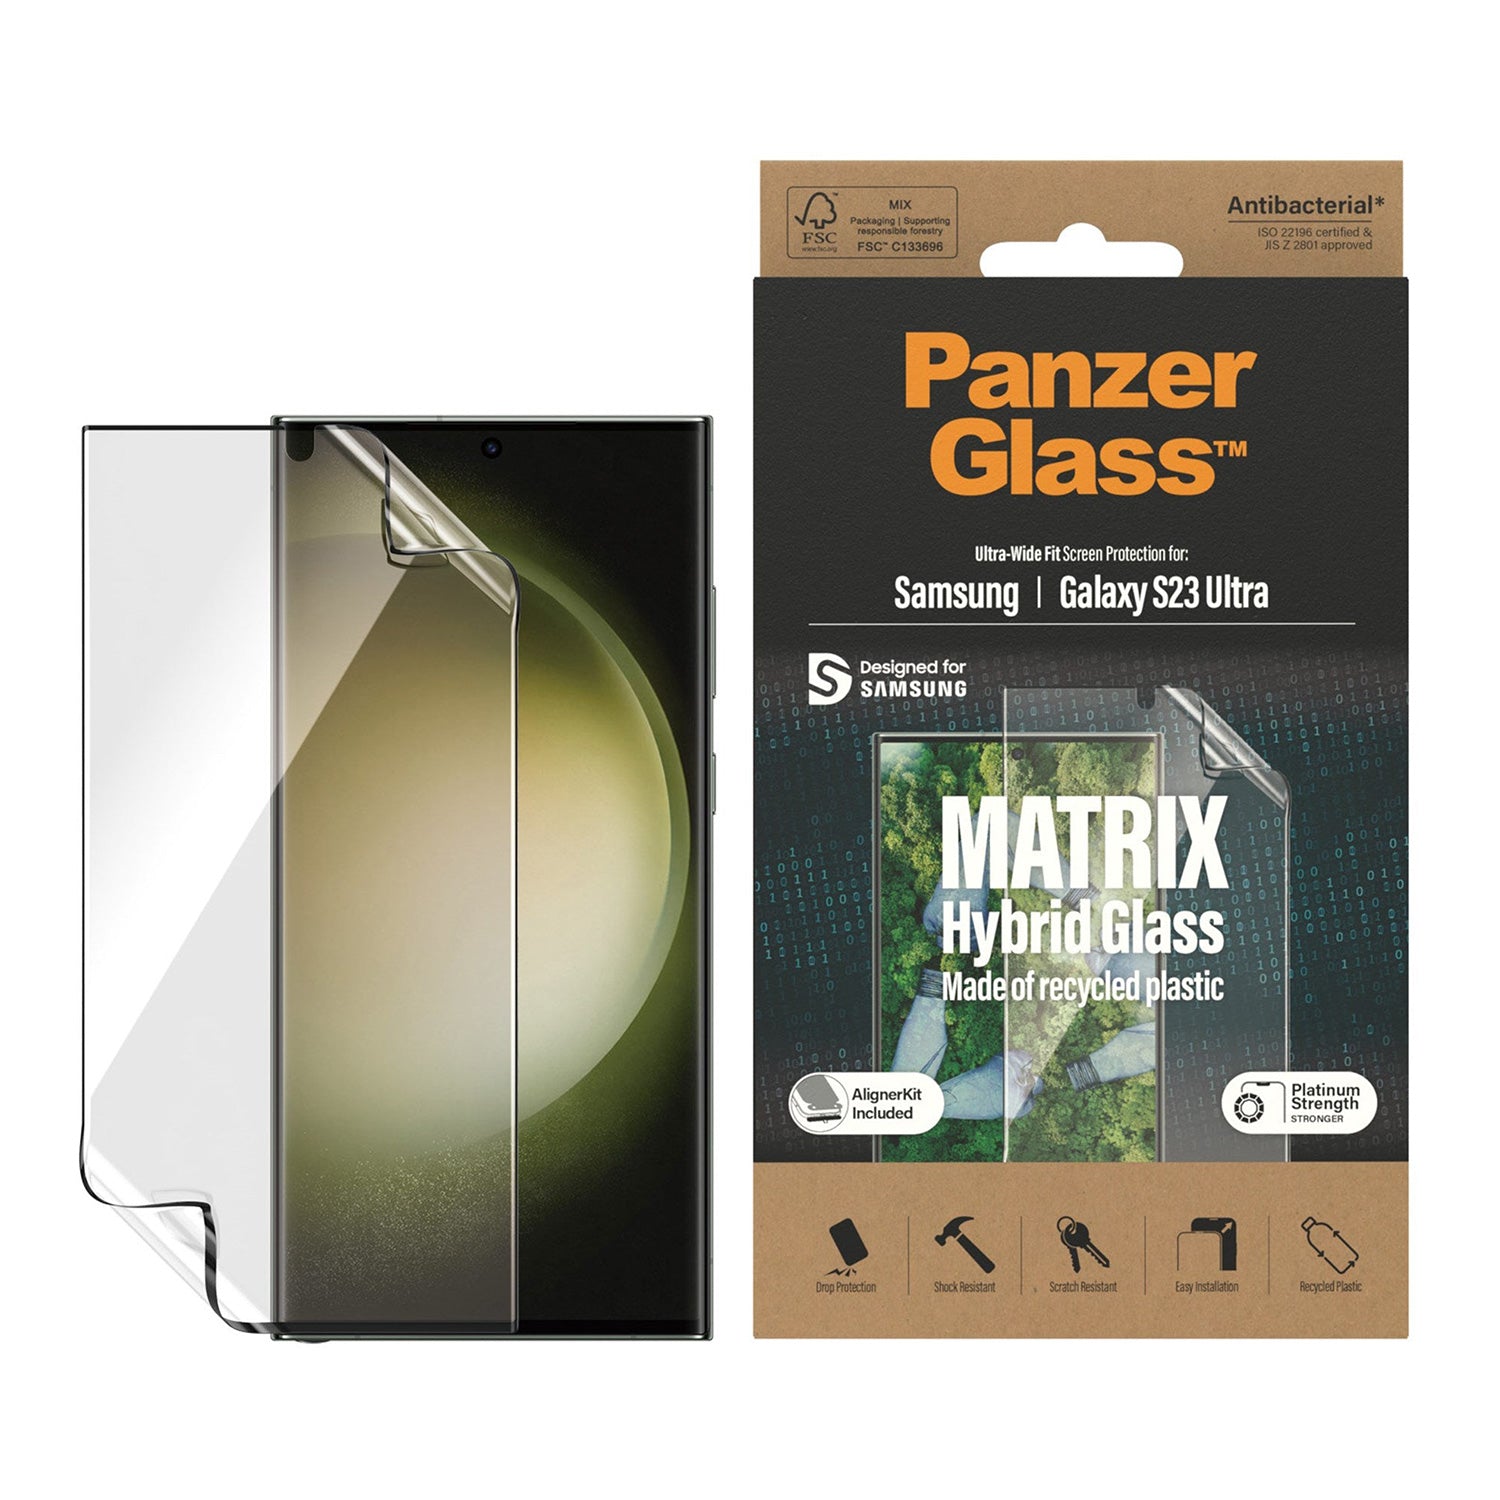 PanzerGlass Samsung Galaxy S23 Ultra Screen Protector Matrix Hybrid Glass with EasyAligner